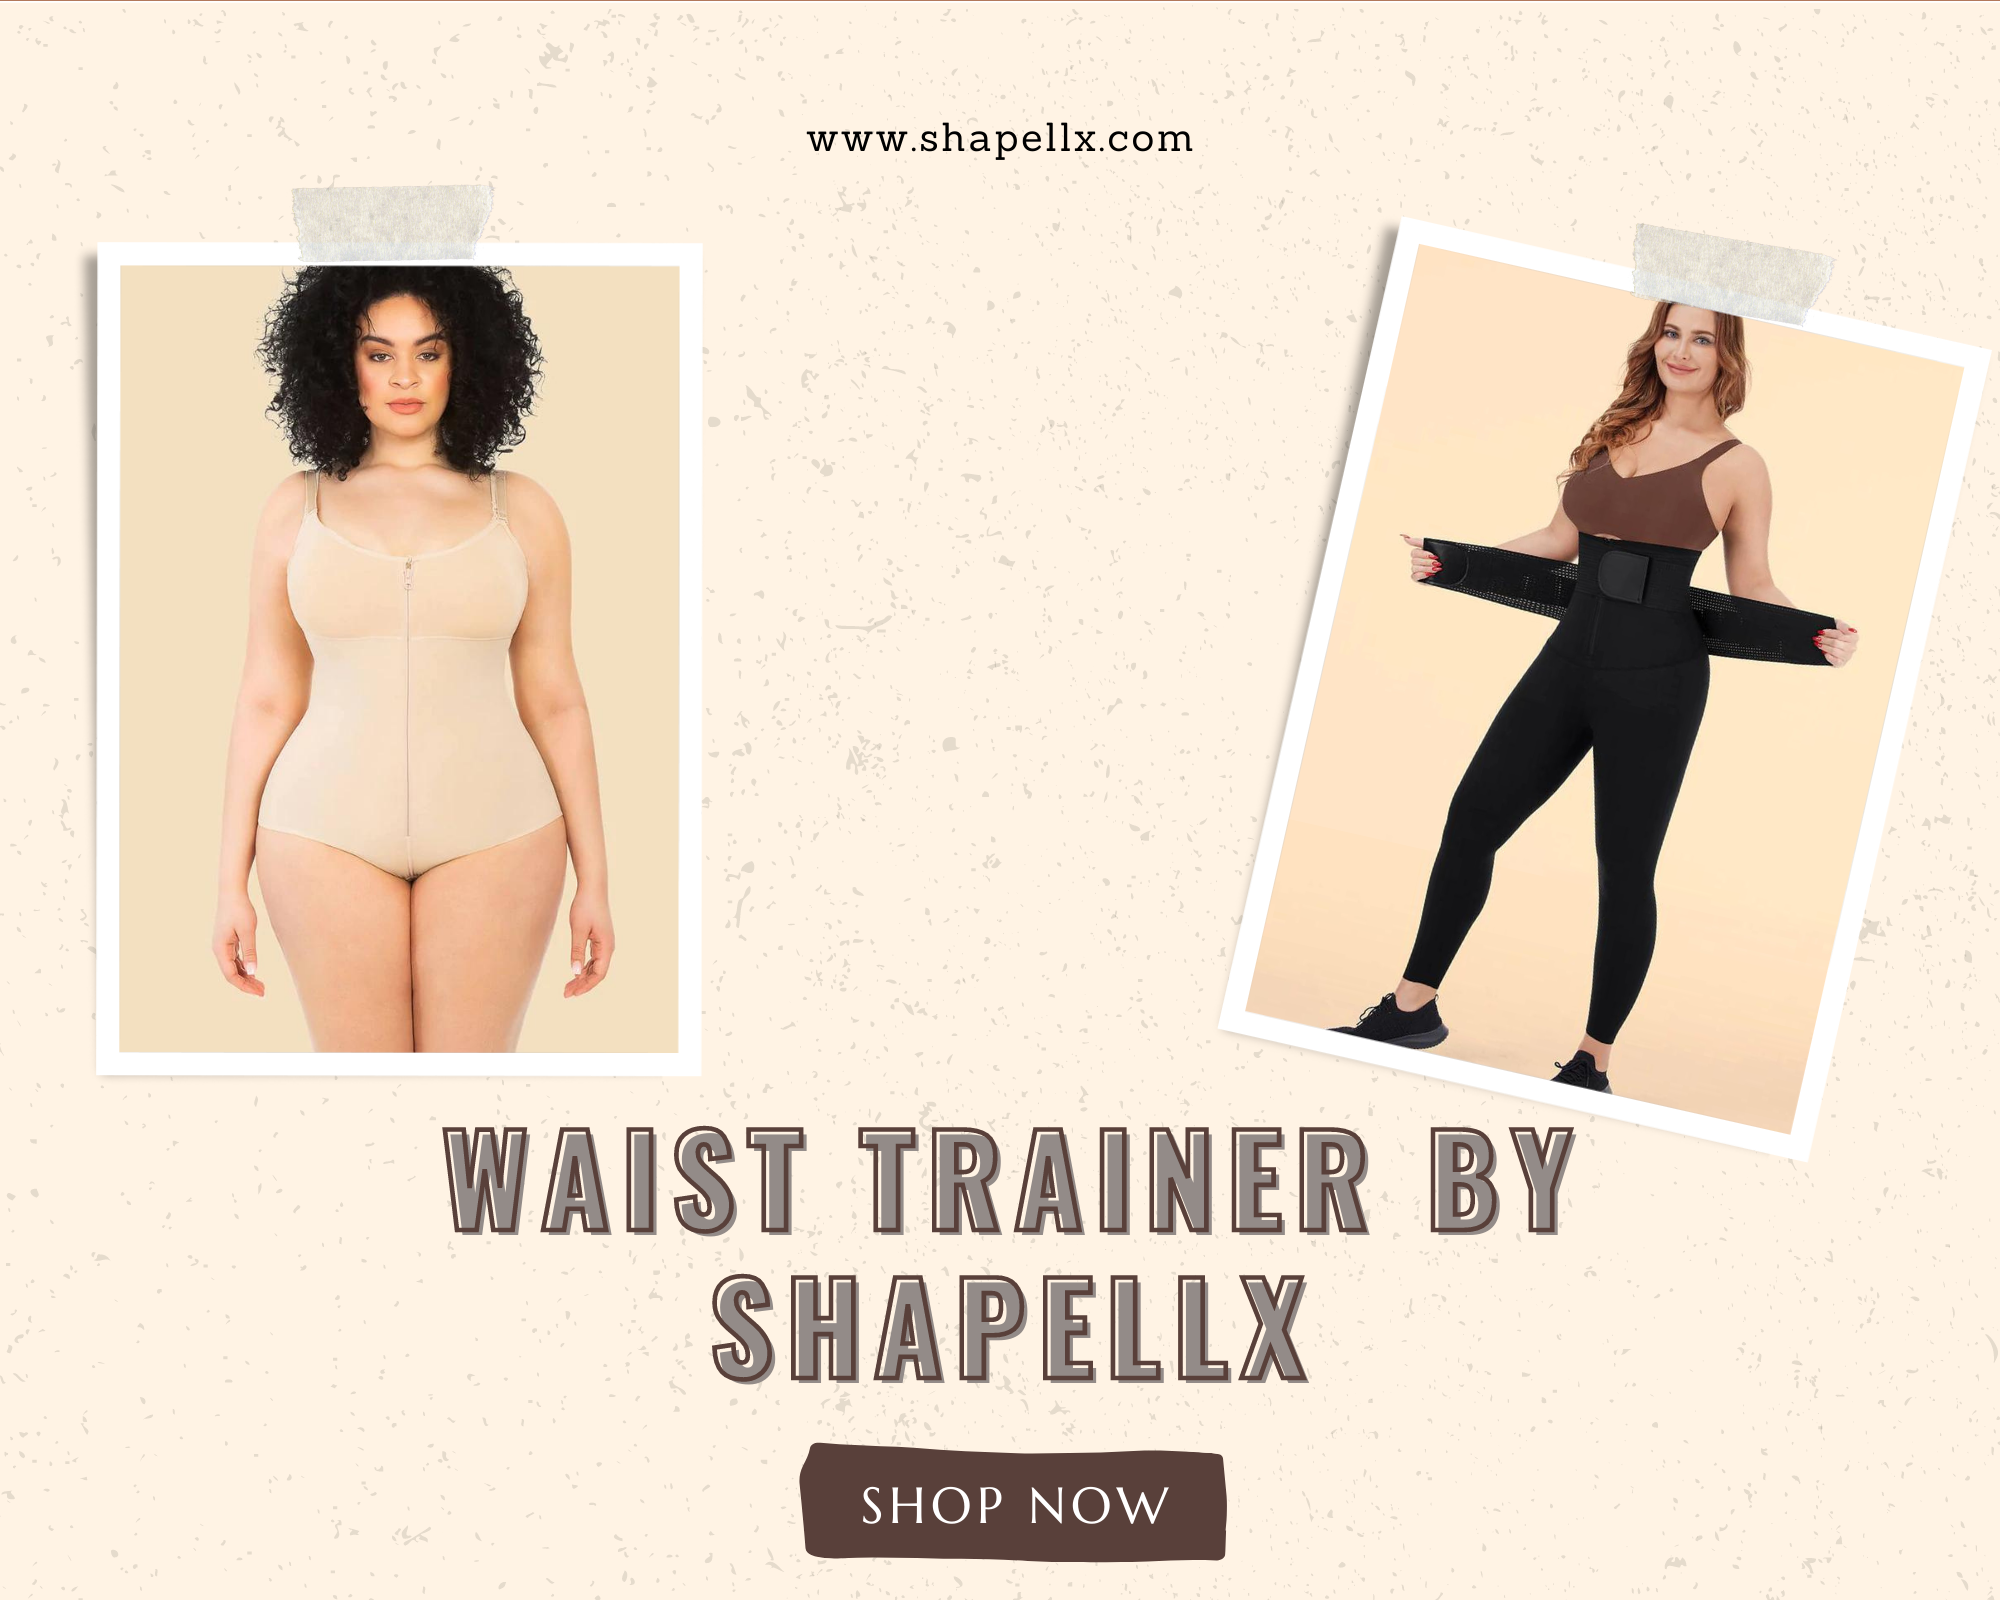 Waist trainer by Shapellx – by Carolina